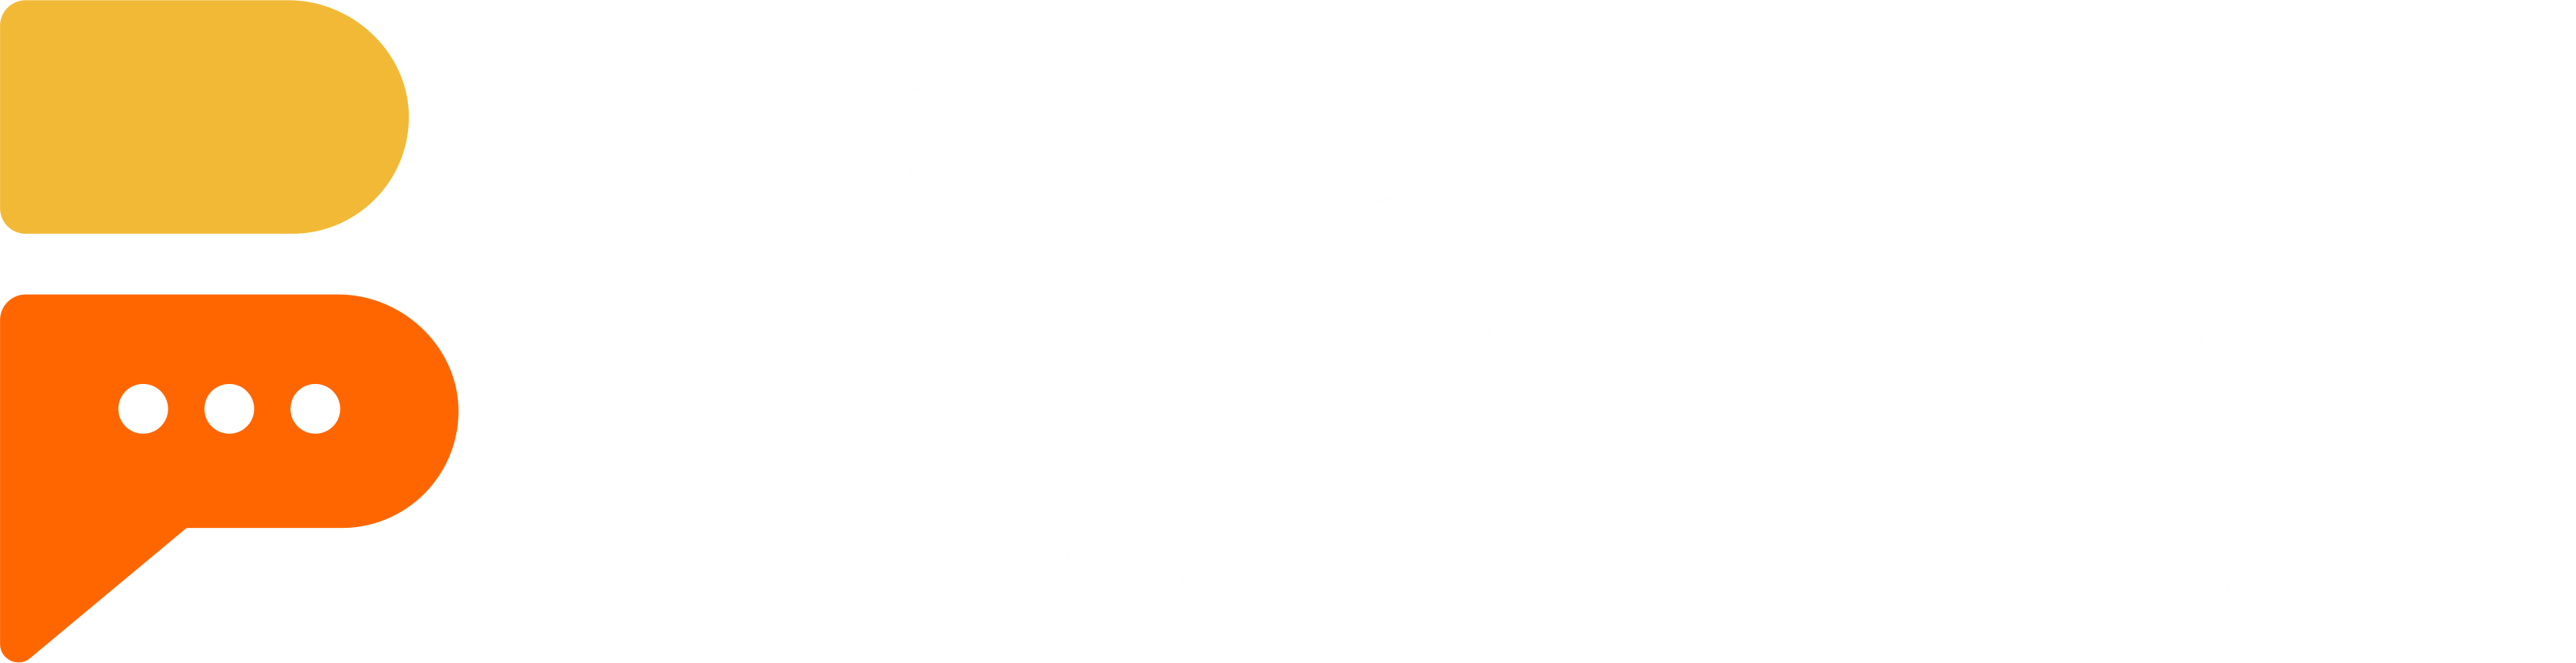 Bilateral Communications